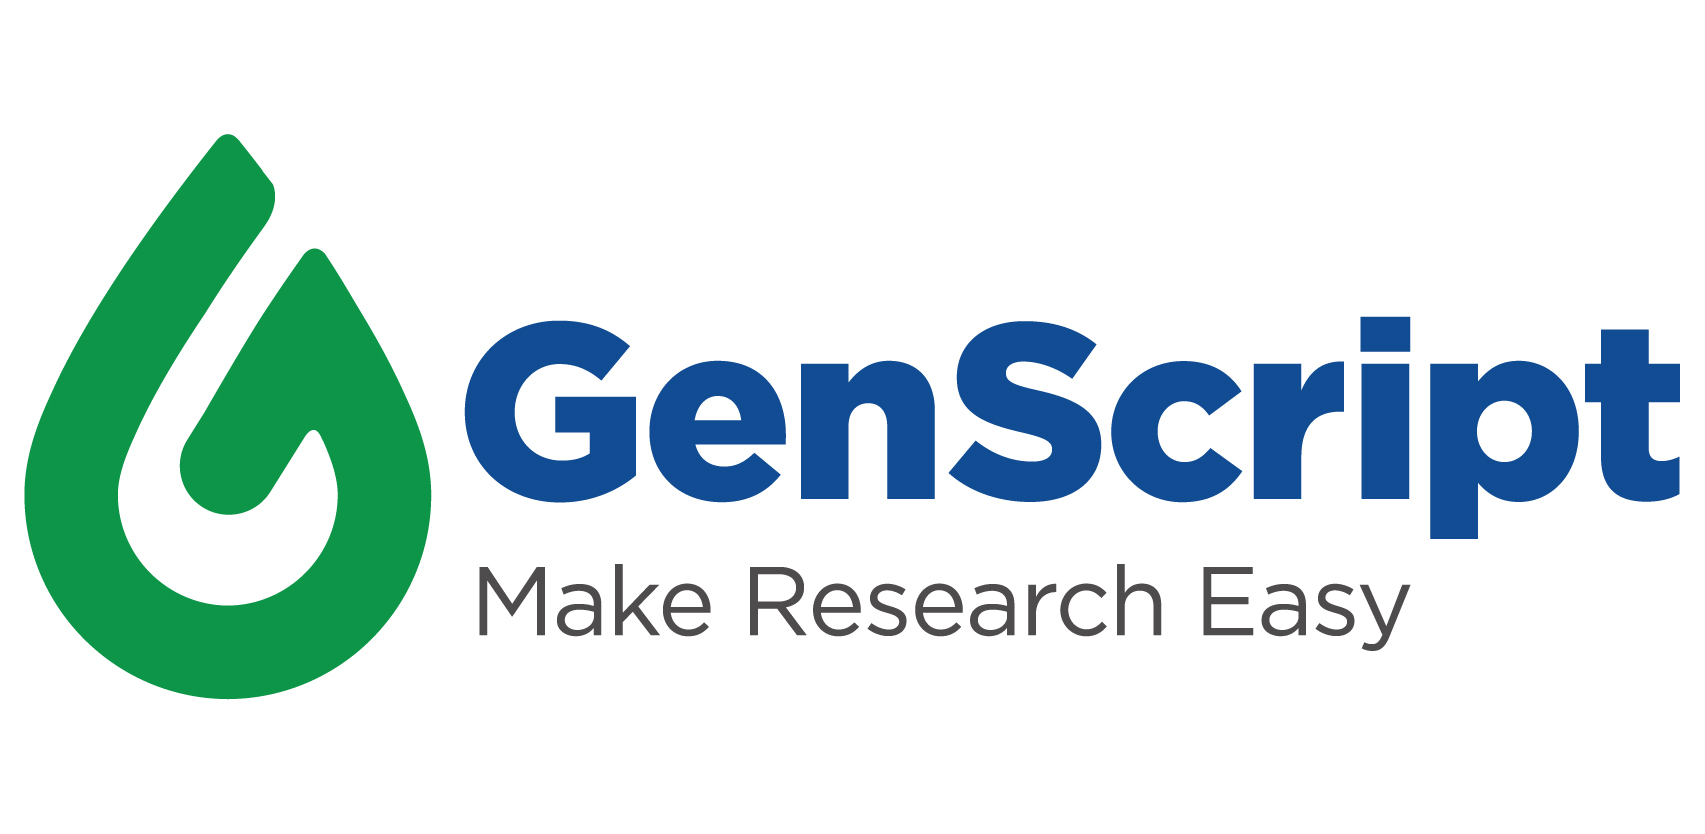 GenScript